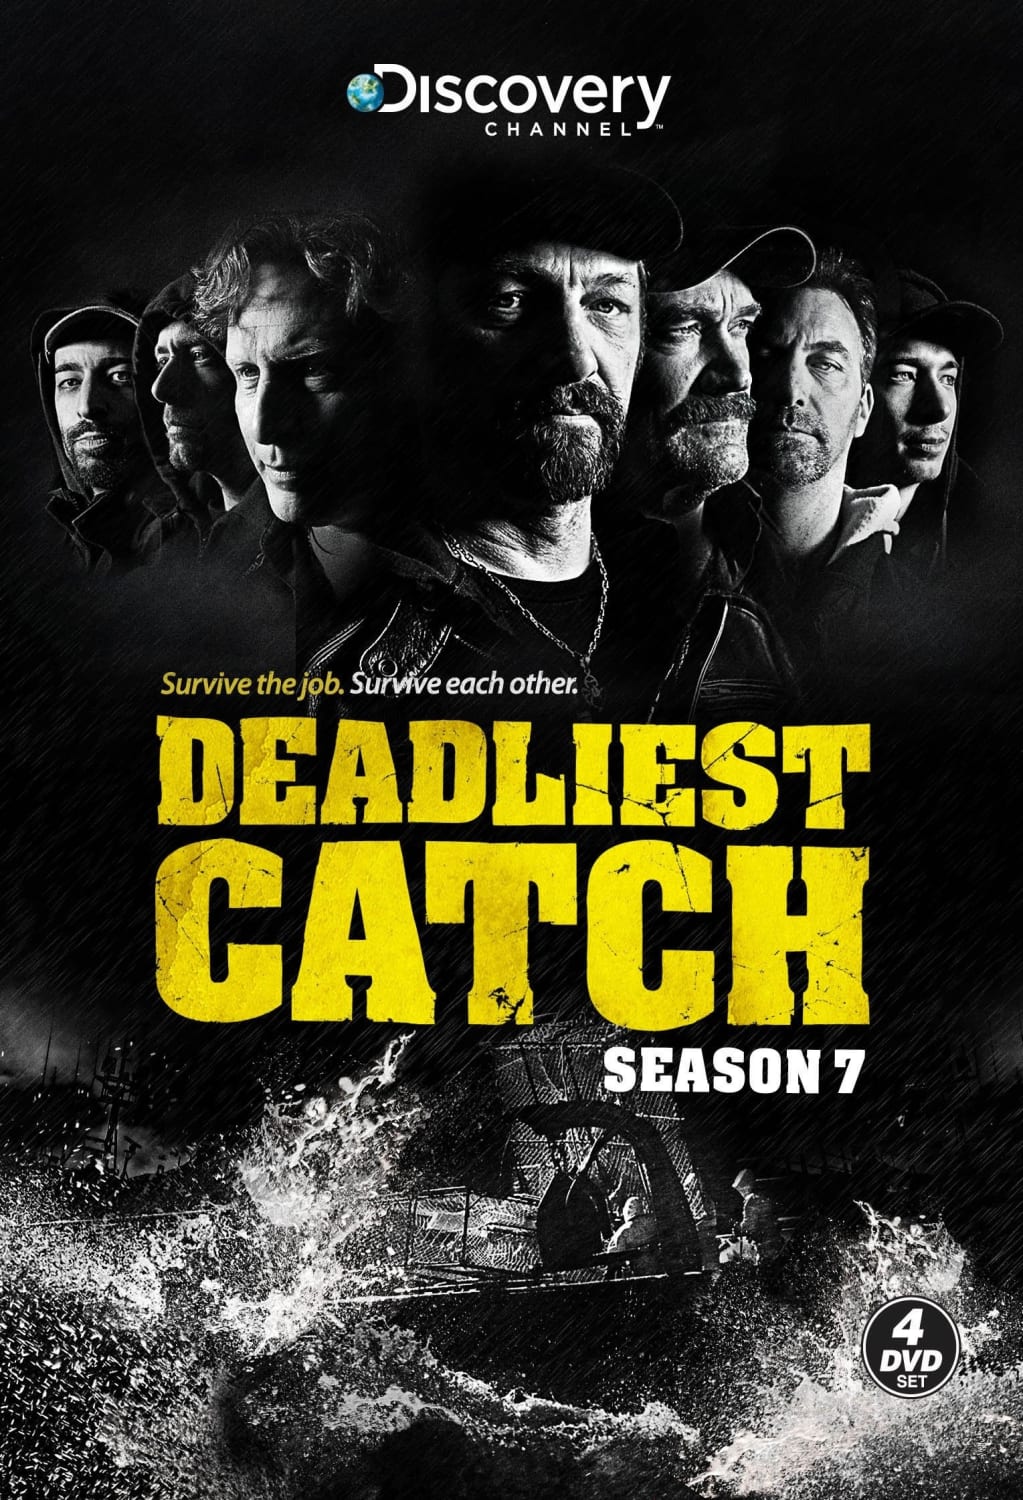 Deadliest Catch – Season 7 (DVD) on MovieShack